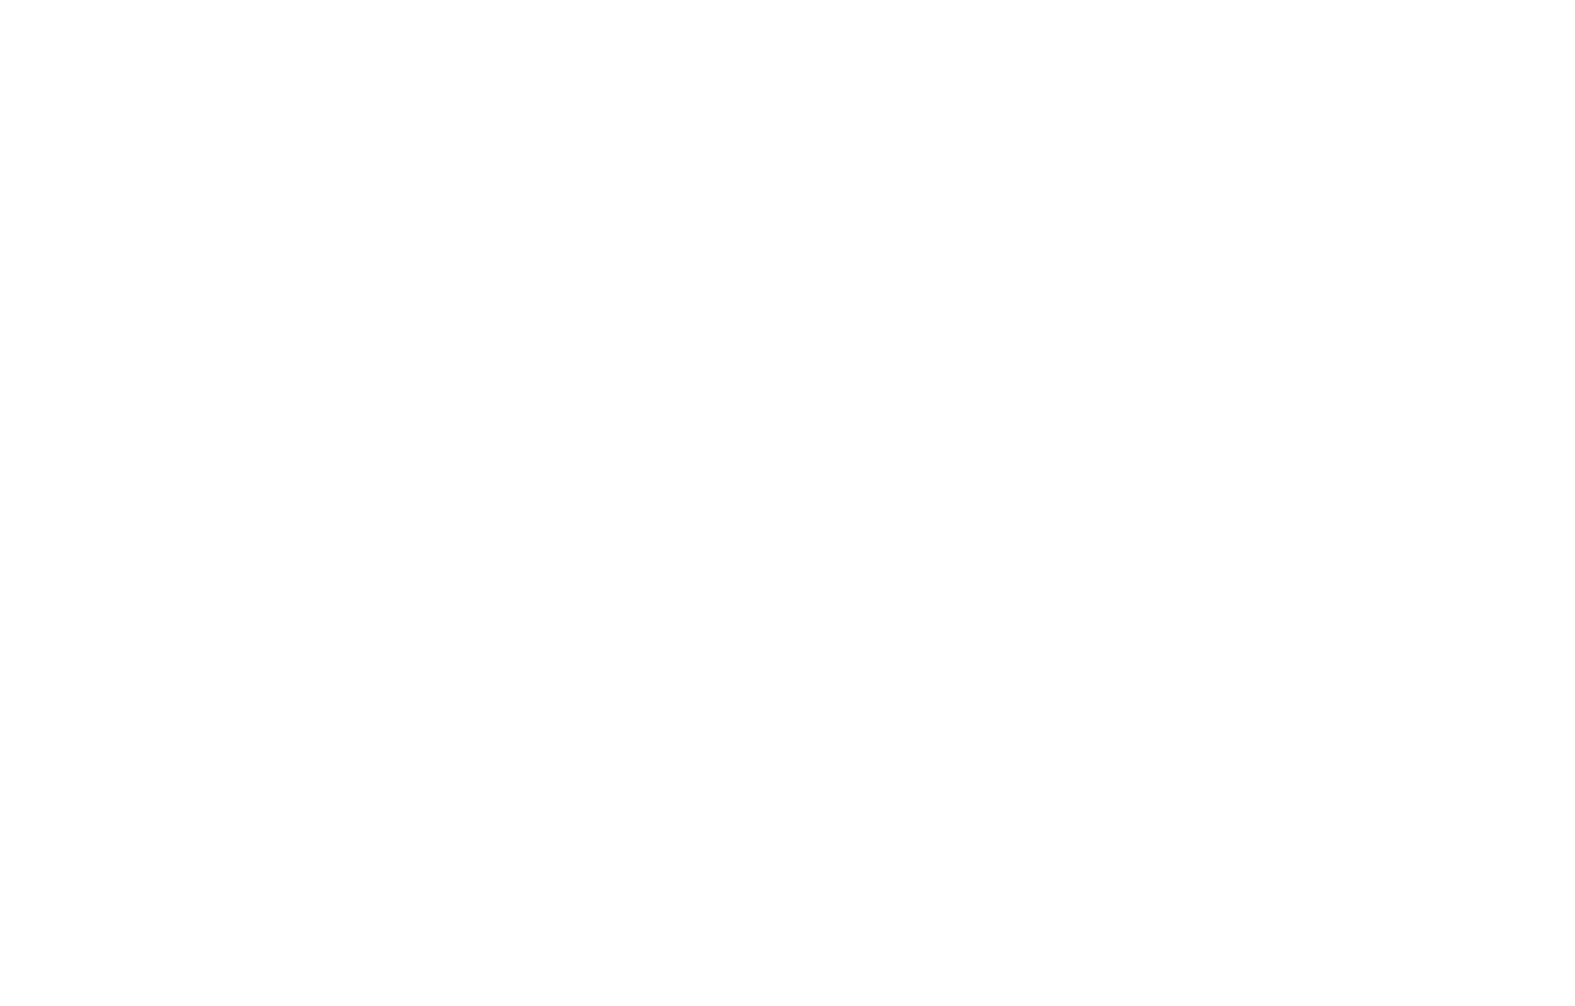 Dubai Refreshment logo grand pour les fonds sombres (PNG transparent)